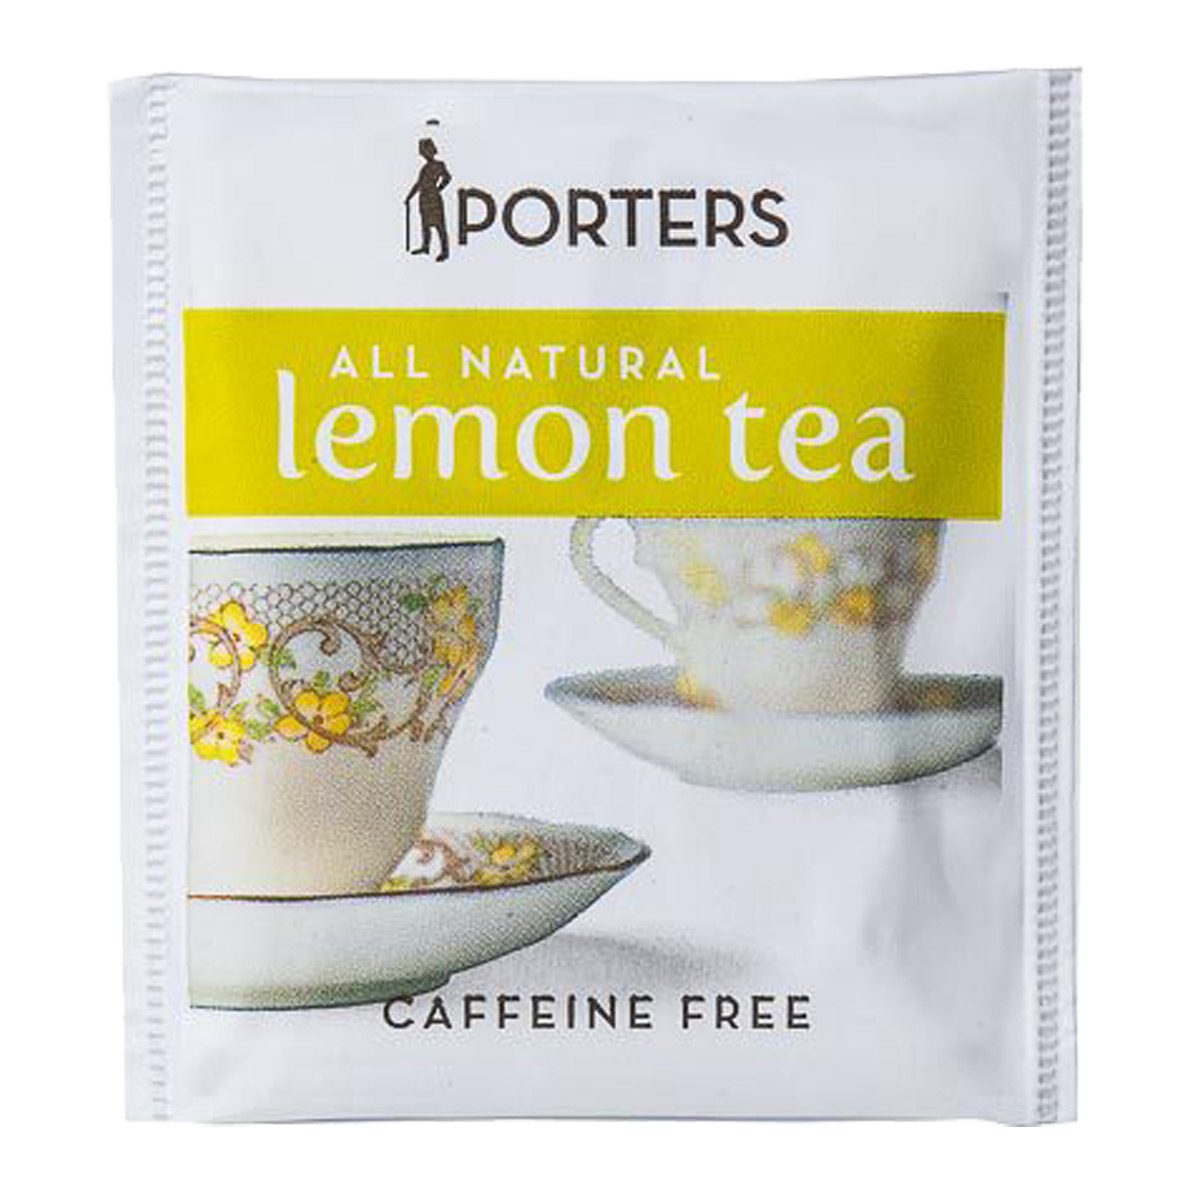 consumables-hospitality-beverage-food-porter-lemon—herbal-teabags-x100-bags-natural-caffeine-free-tea-pure -lemongrass-lemon-peel-packaging-plastic-foil-free-vjs-distributors-HPHERBL